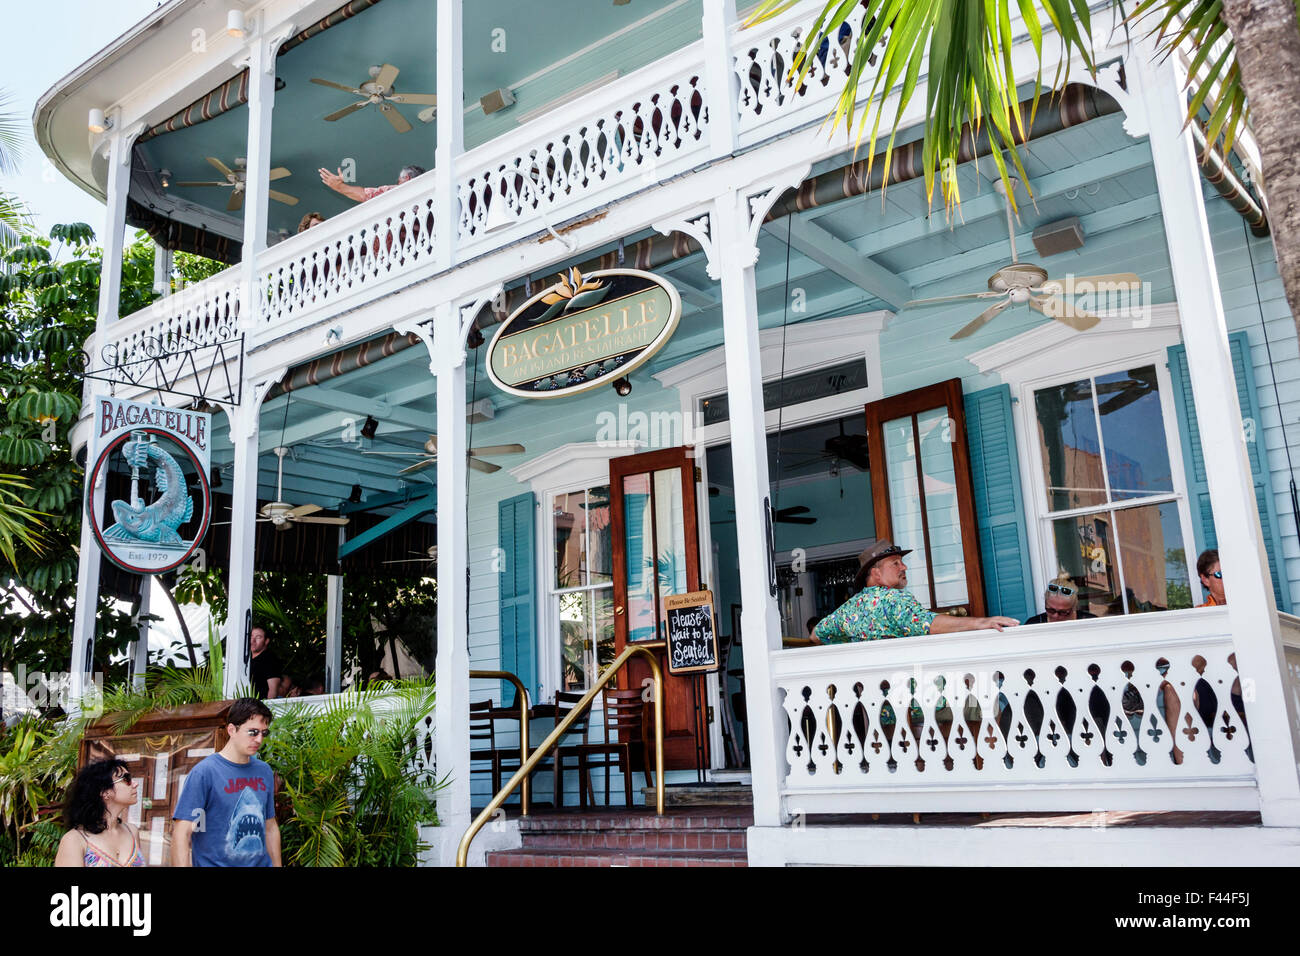 Key West Florida Keys Duval Street Bagatelle restaurant front Stock